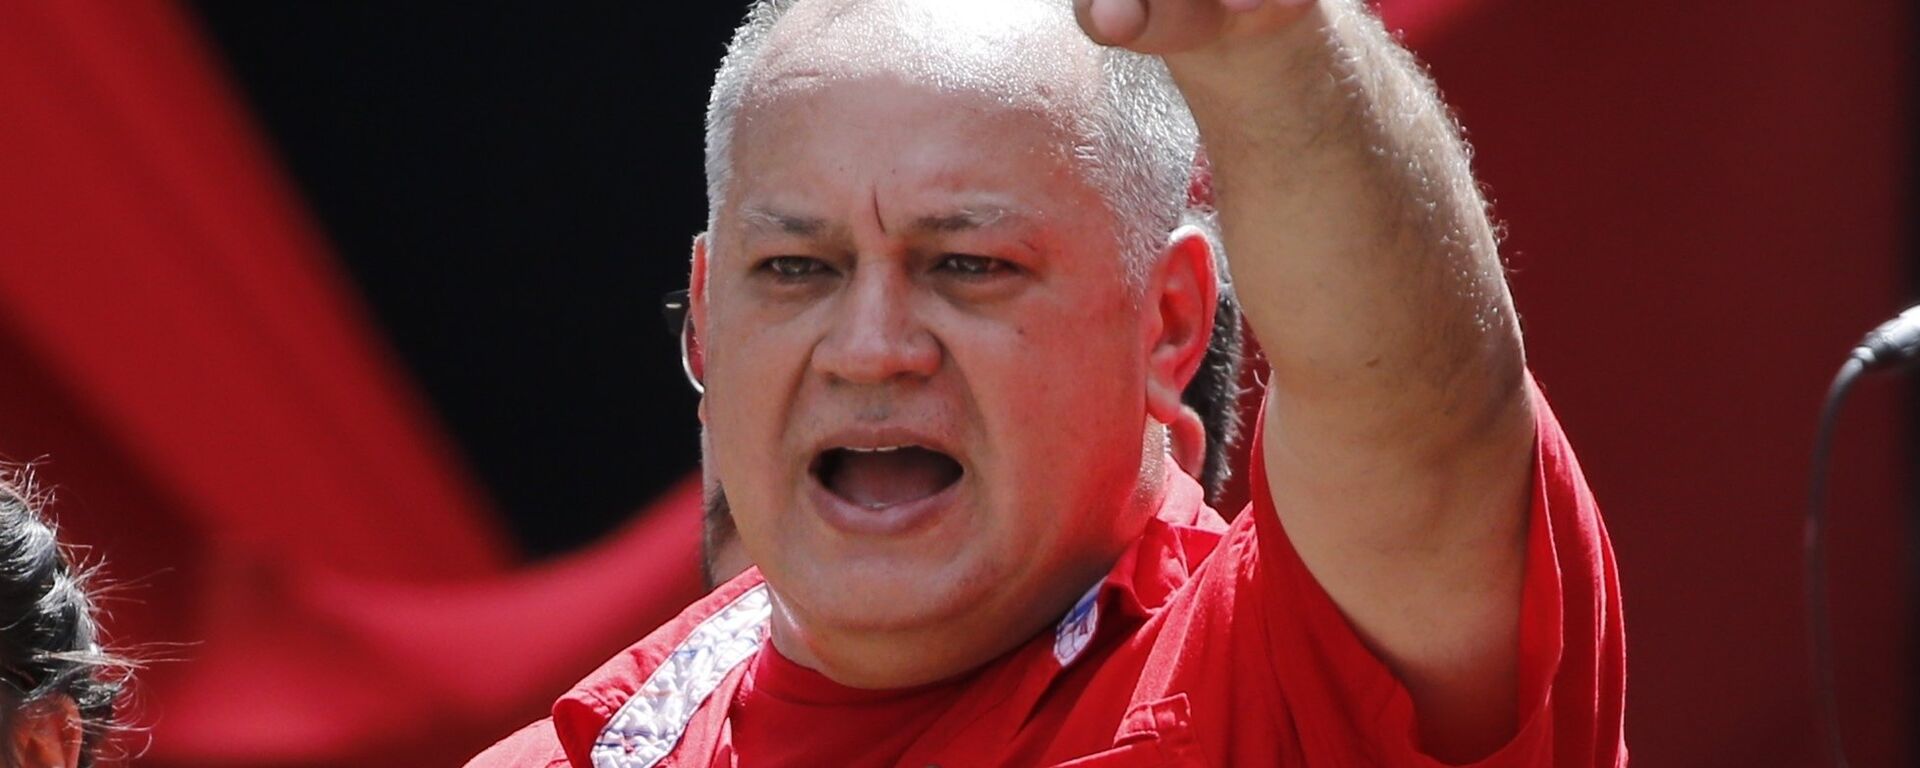 Diosdado Cabello, presidente de la Asamblea Nacional Constituyente de Venezuela - Sputnik Mundo, 1920, 28.01.2021